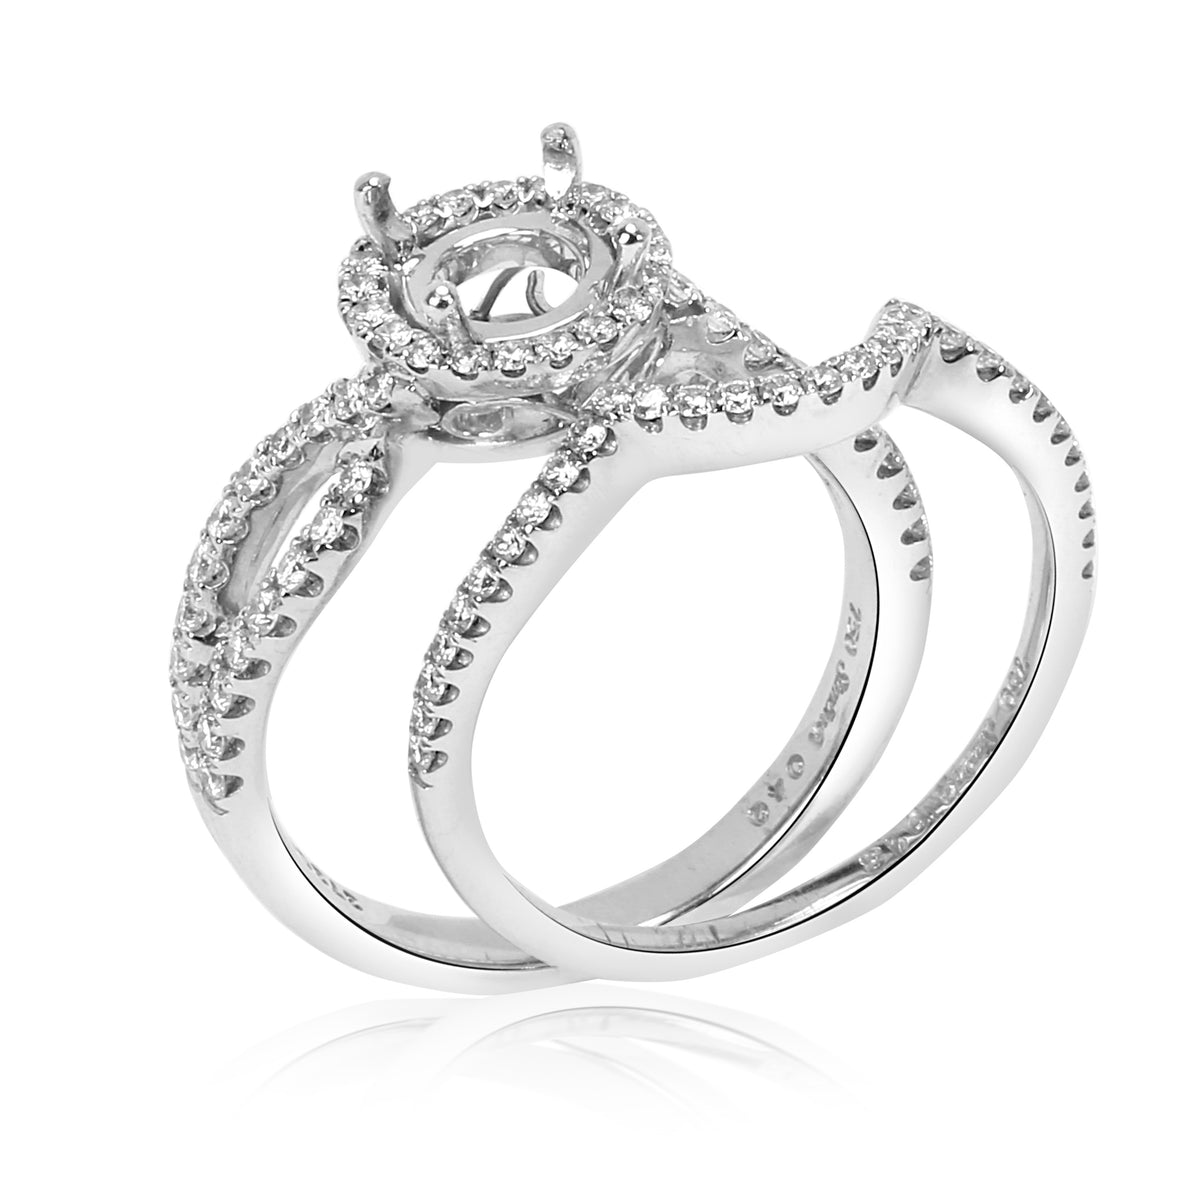 Simon G Twisted Engagement Ring Wedding Set in 18K White Gold